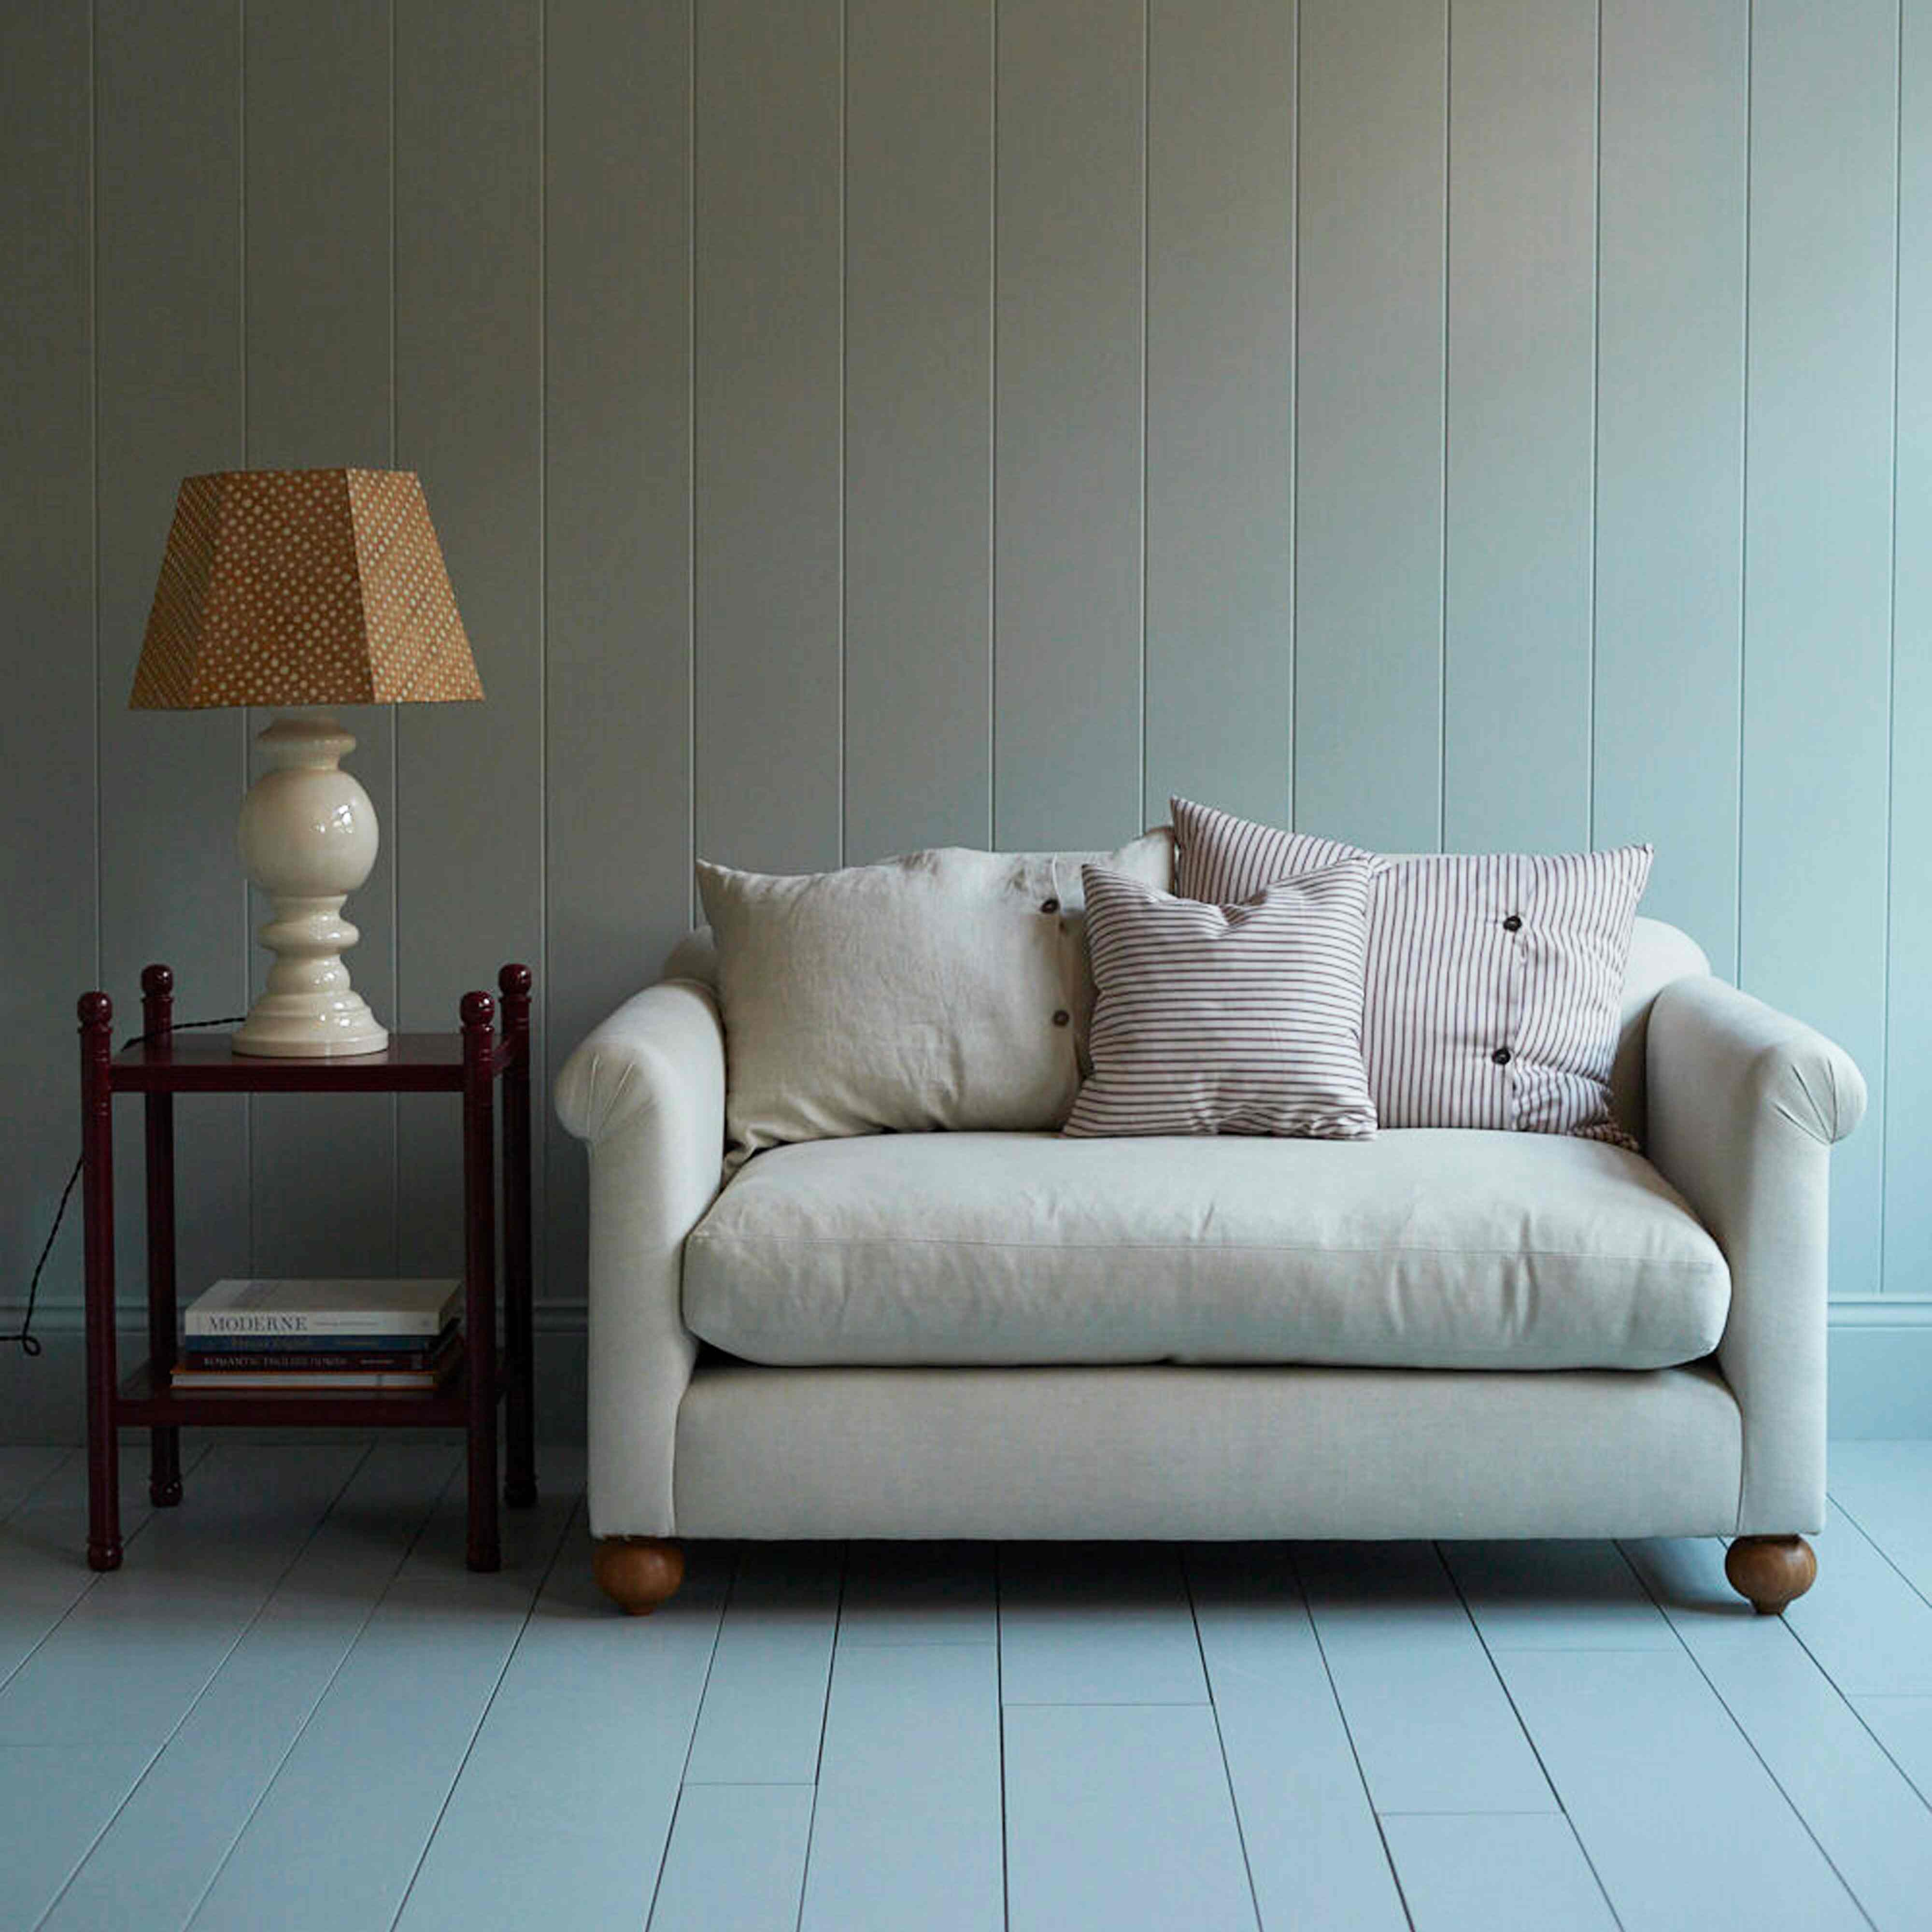  Dolittle 2 Seater Sofa in Laidback Linen Dusky Pink - Nicola Harding 